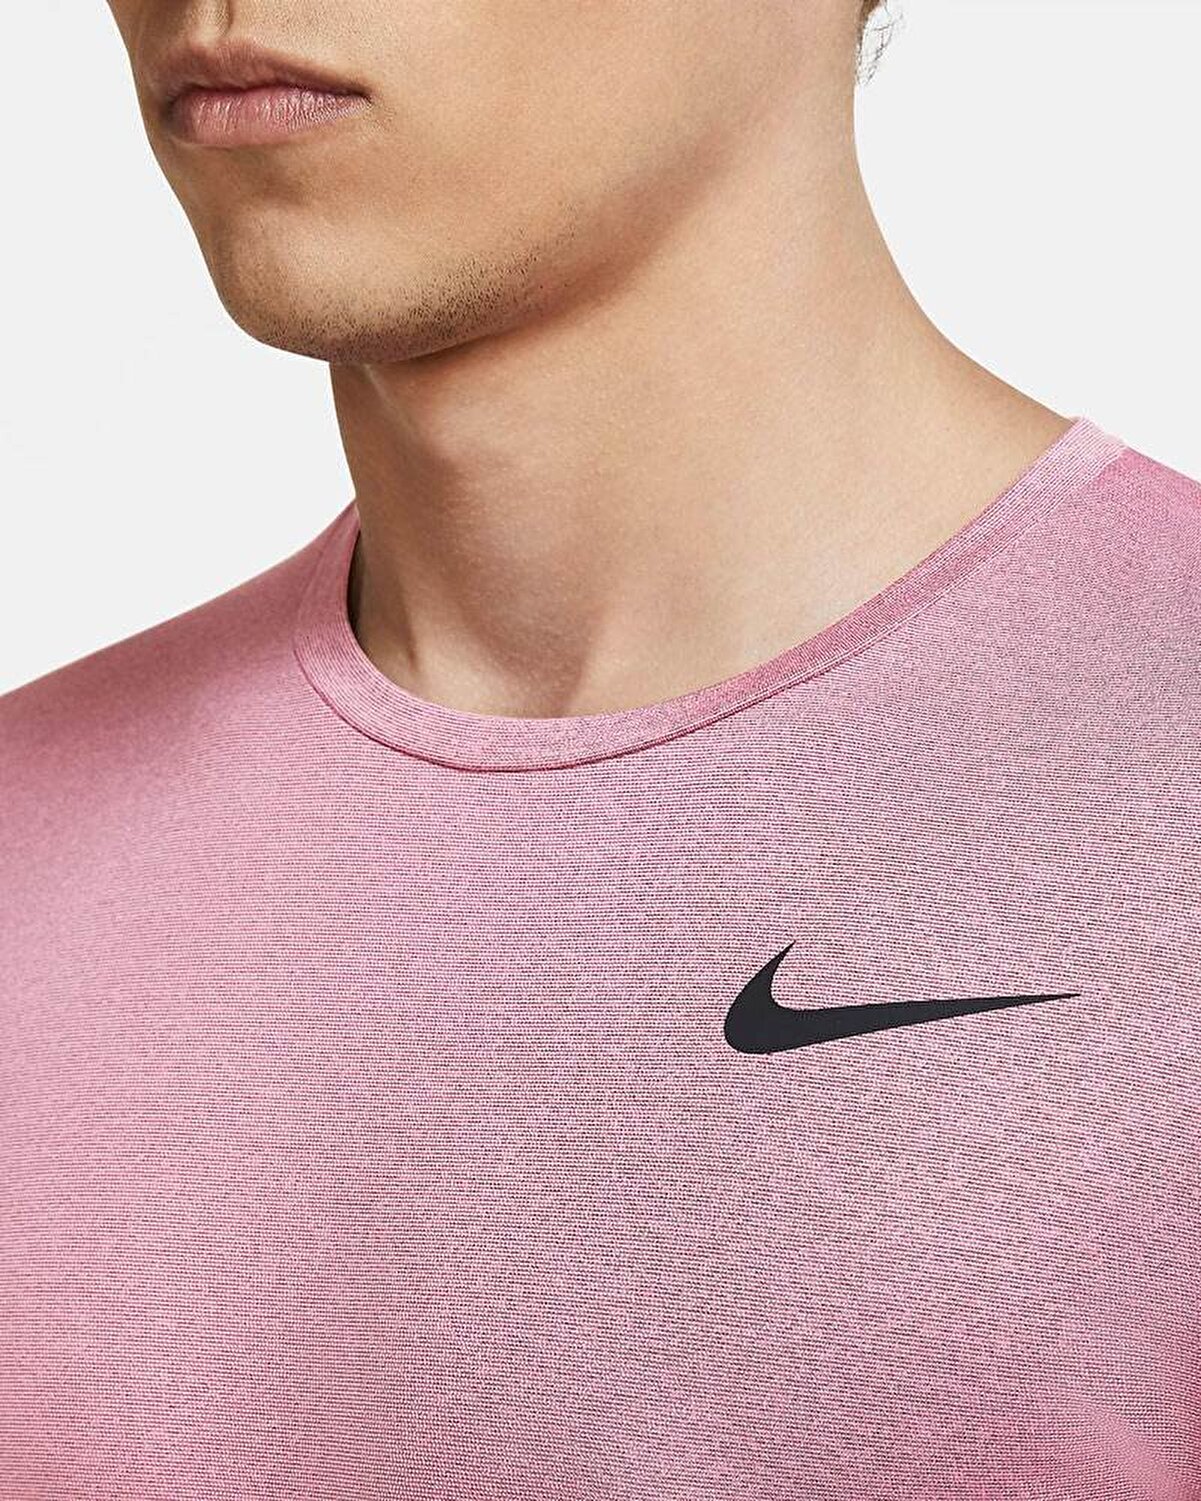 Nike Ss Dry T-shirt Men